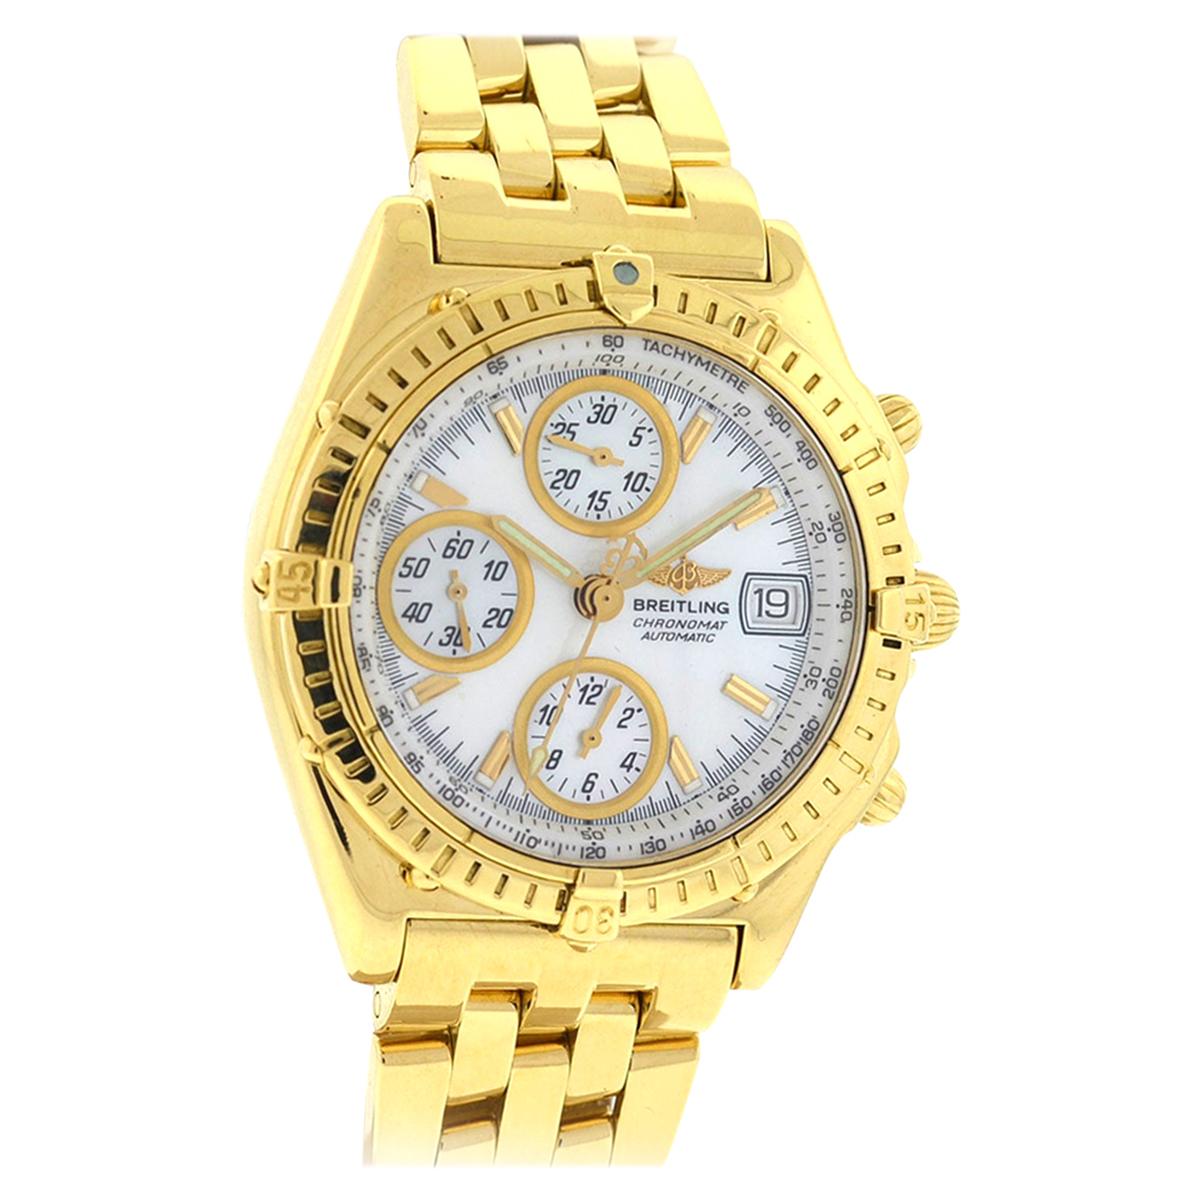 Breitling K13050.1 18 Karat Yellow Gold Chronomat MOP Dial Automatic Watch